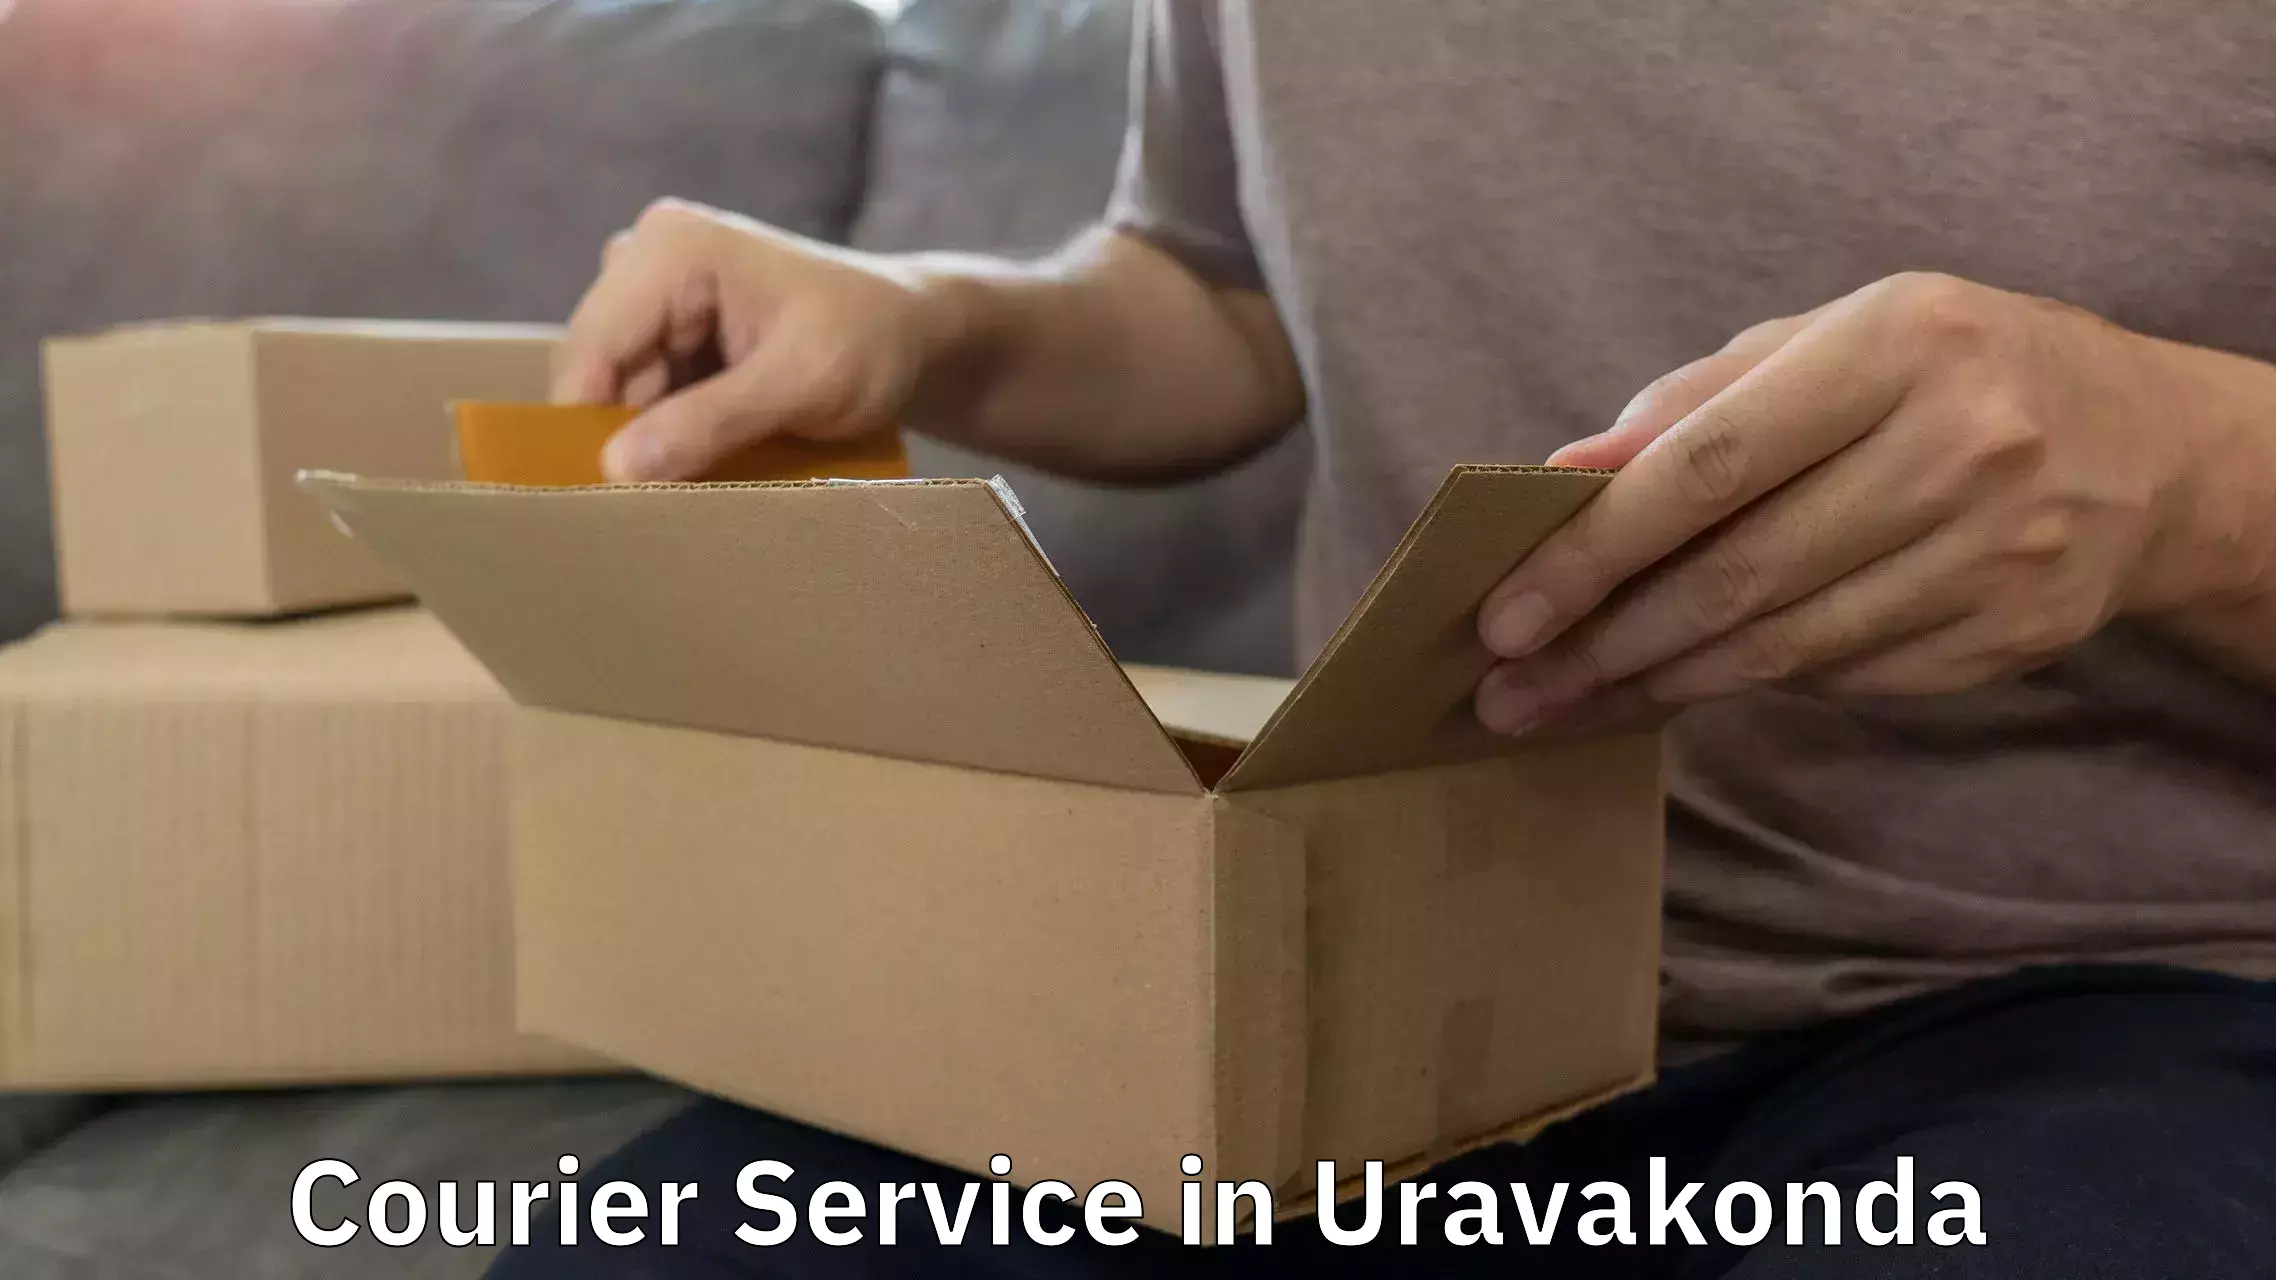 Seamless shipping experience in Uravakonda